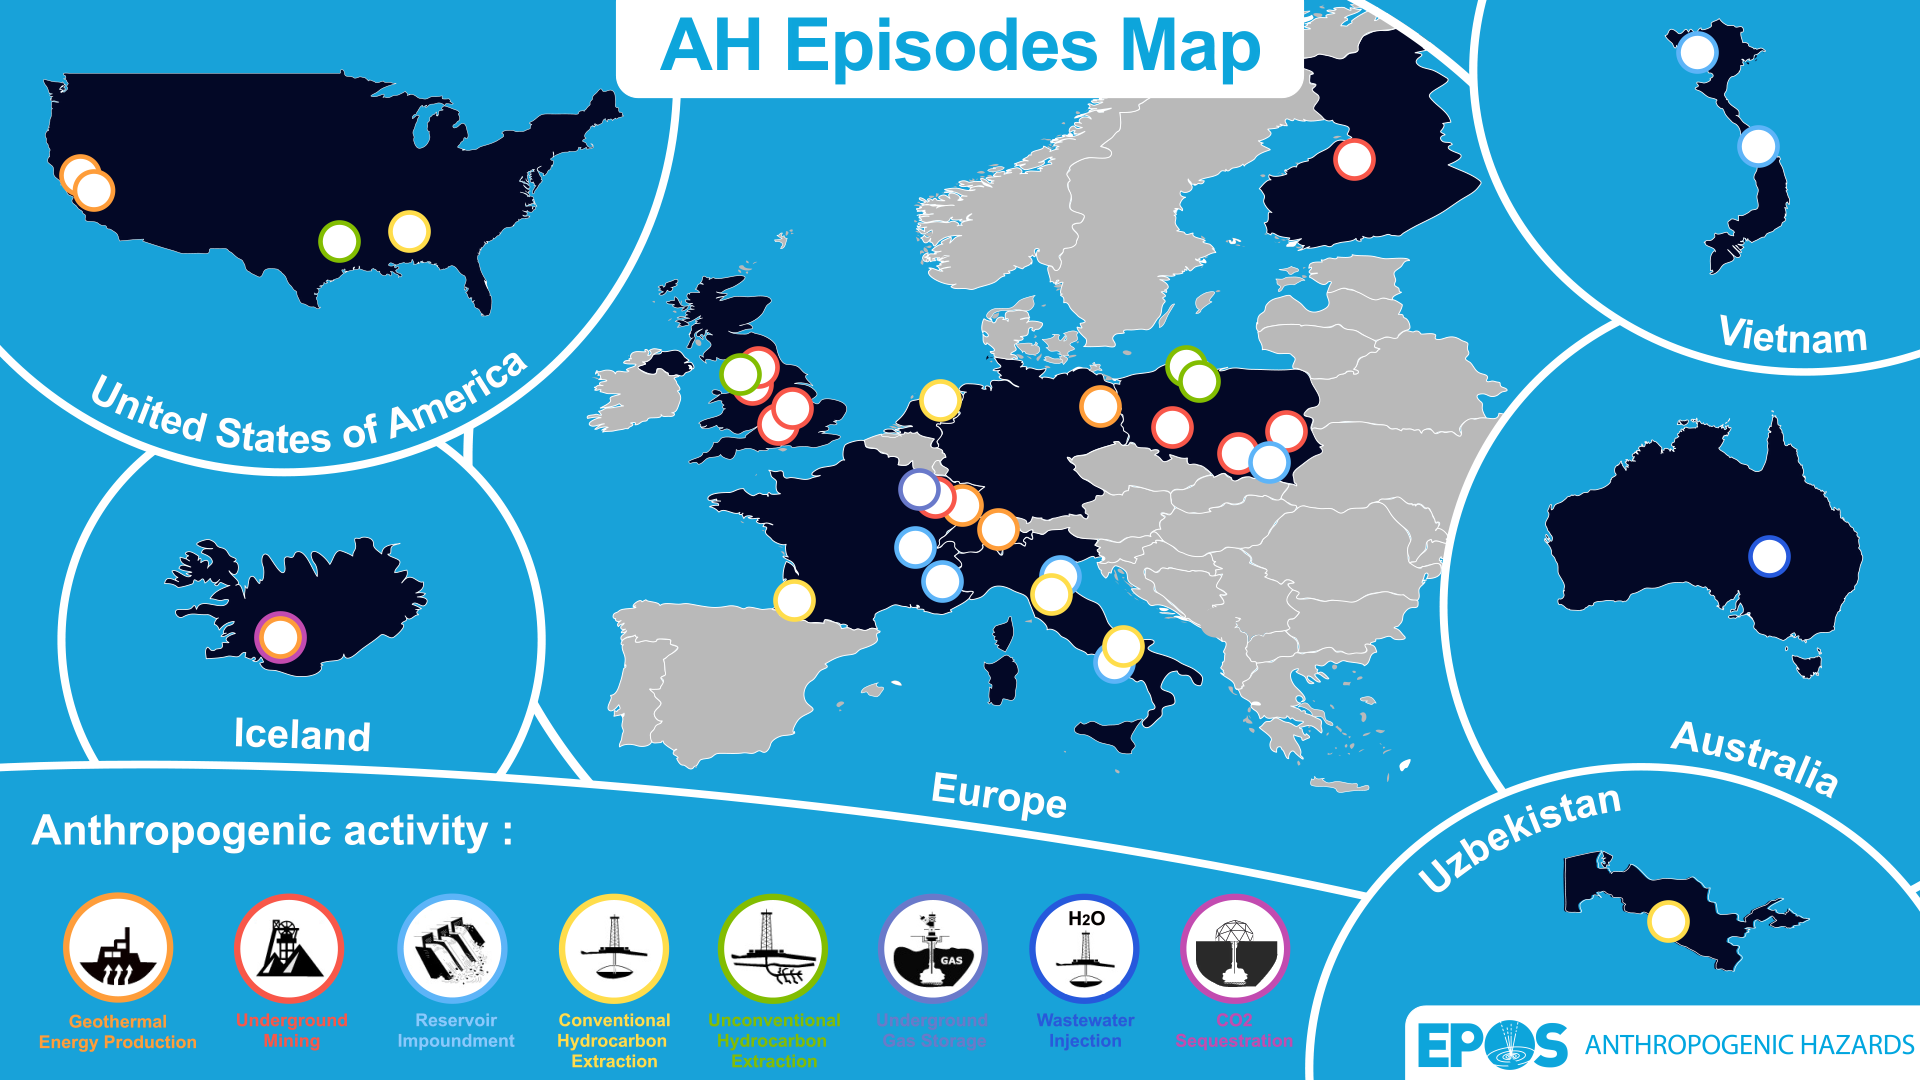 Episodes map